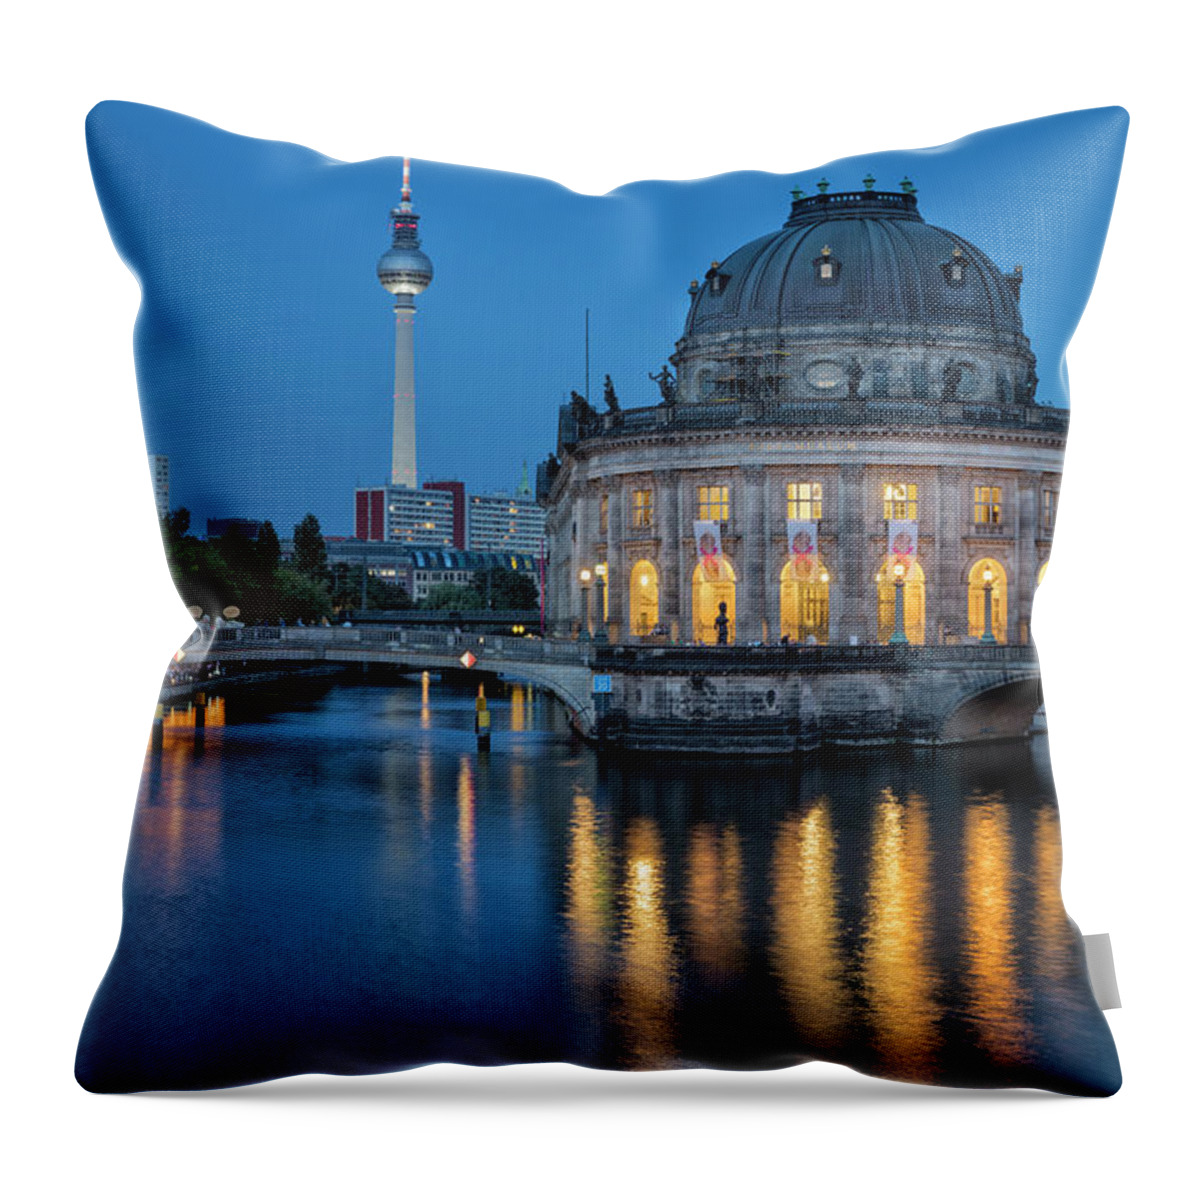 Estock Throw Pillow featuring the digital art Museum Island In Berlin by Massimo Ripani